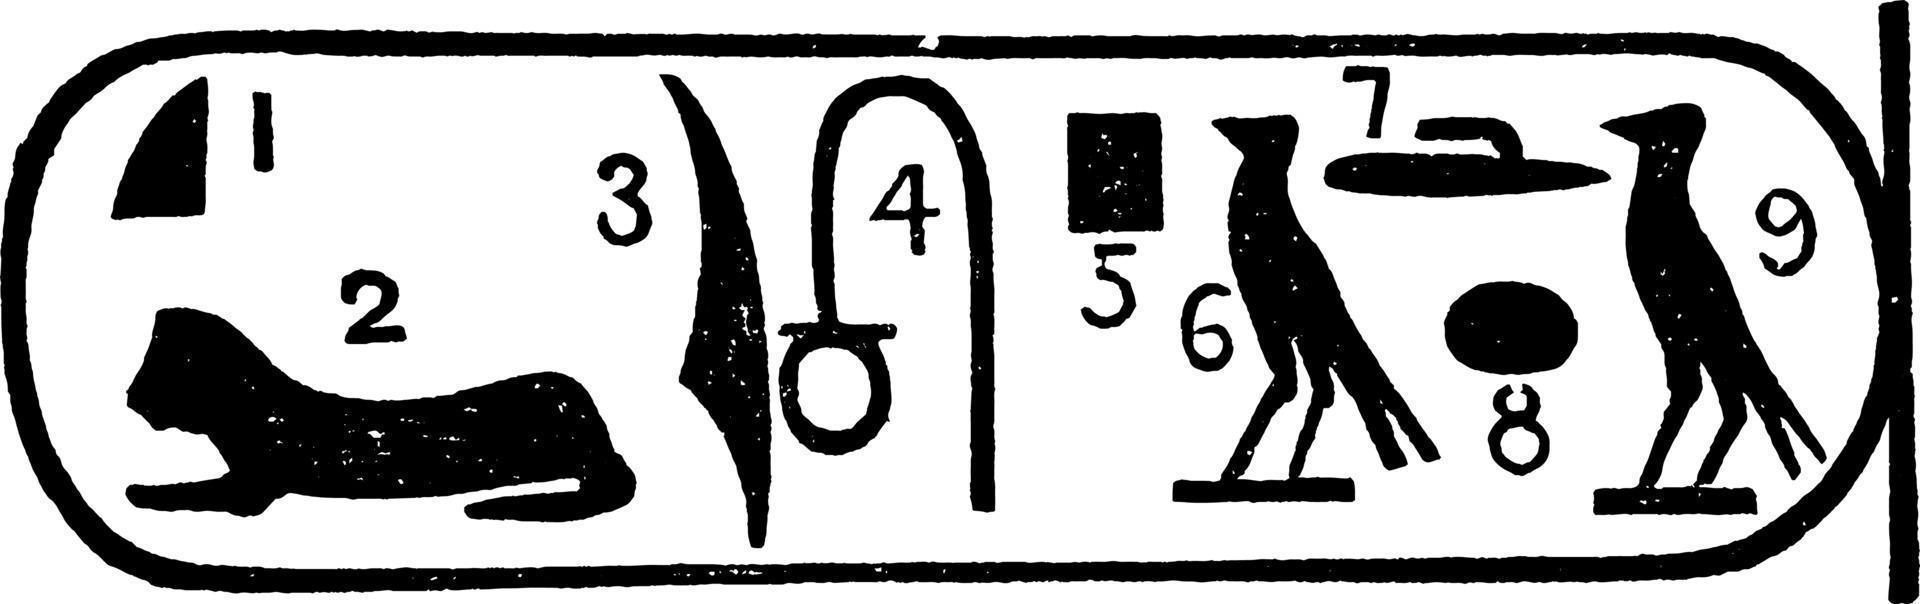 piedra rosetta o lectura de jeroglíficos, grabado antiguo vector